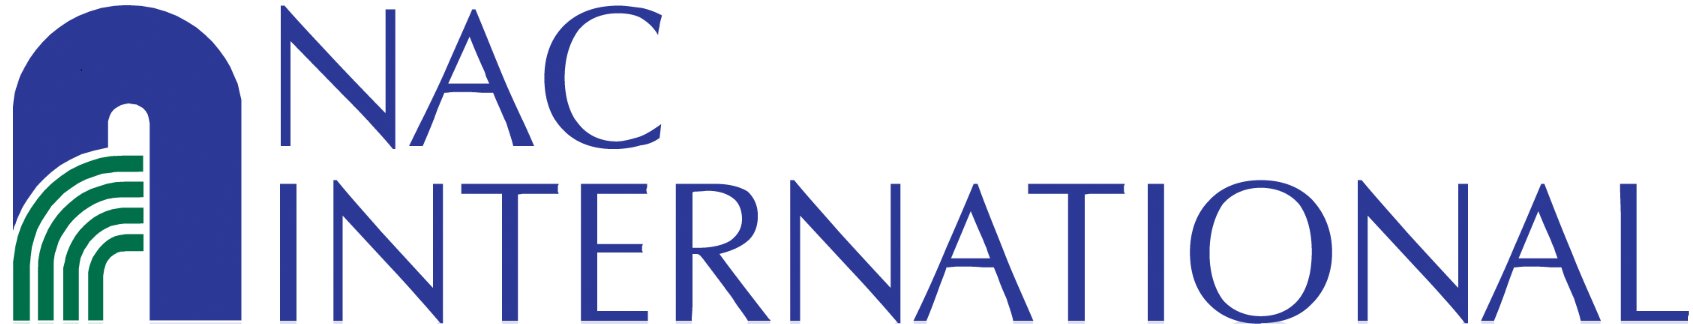 NAC International Inc. logo